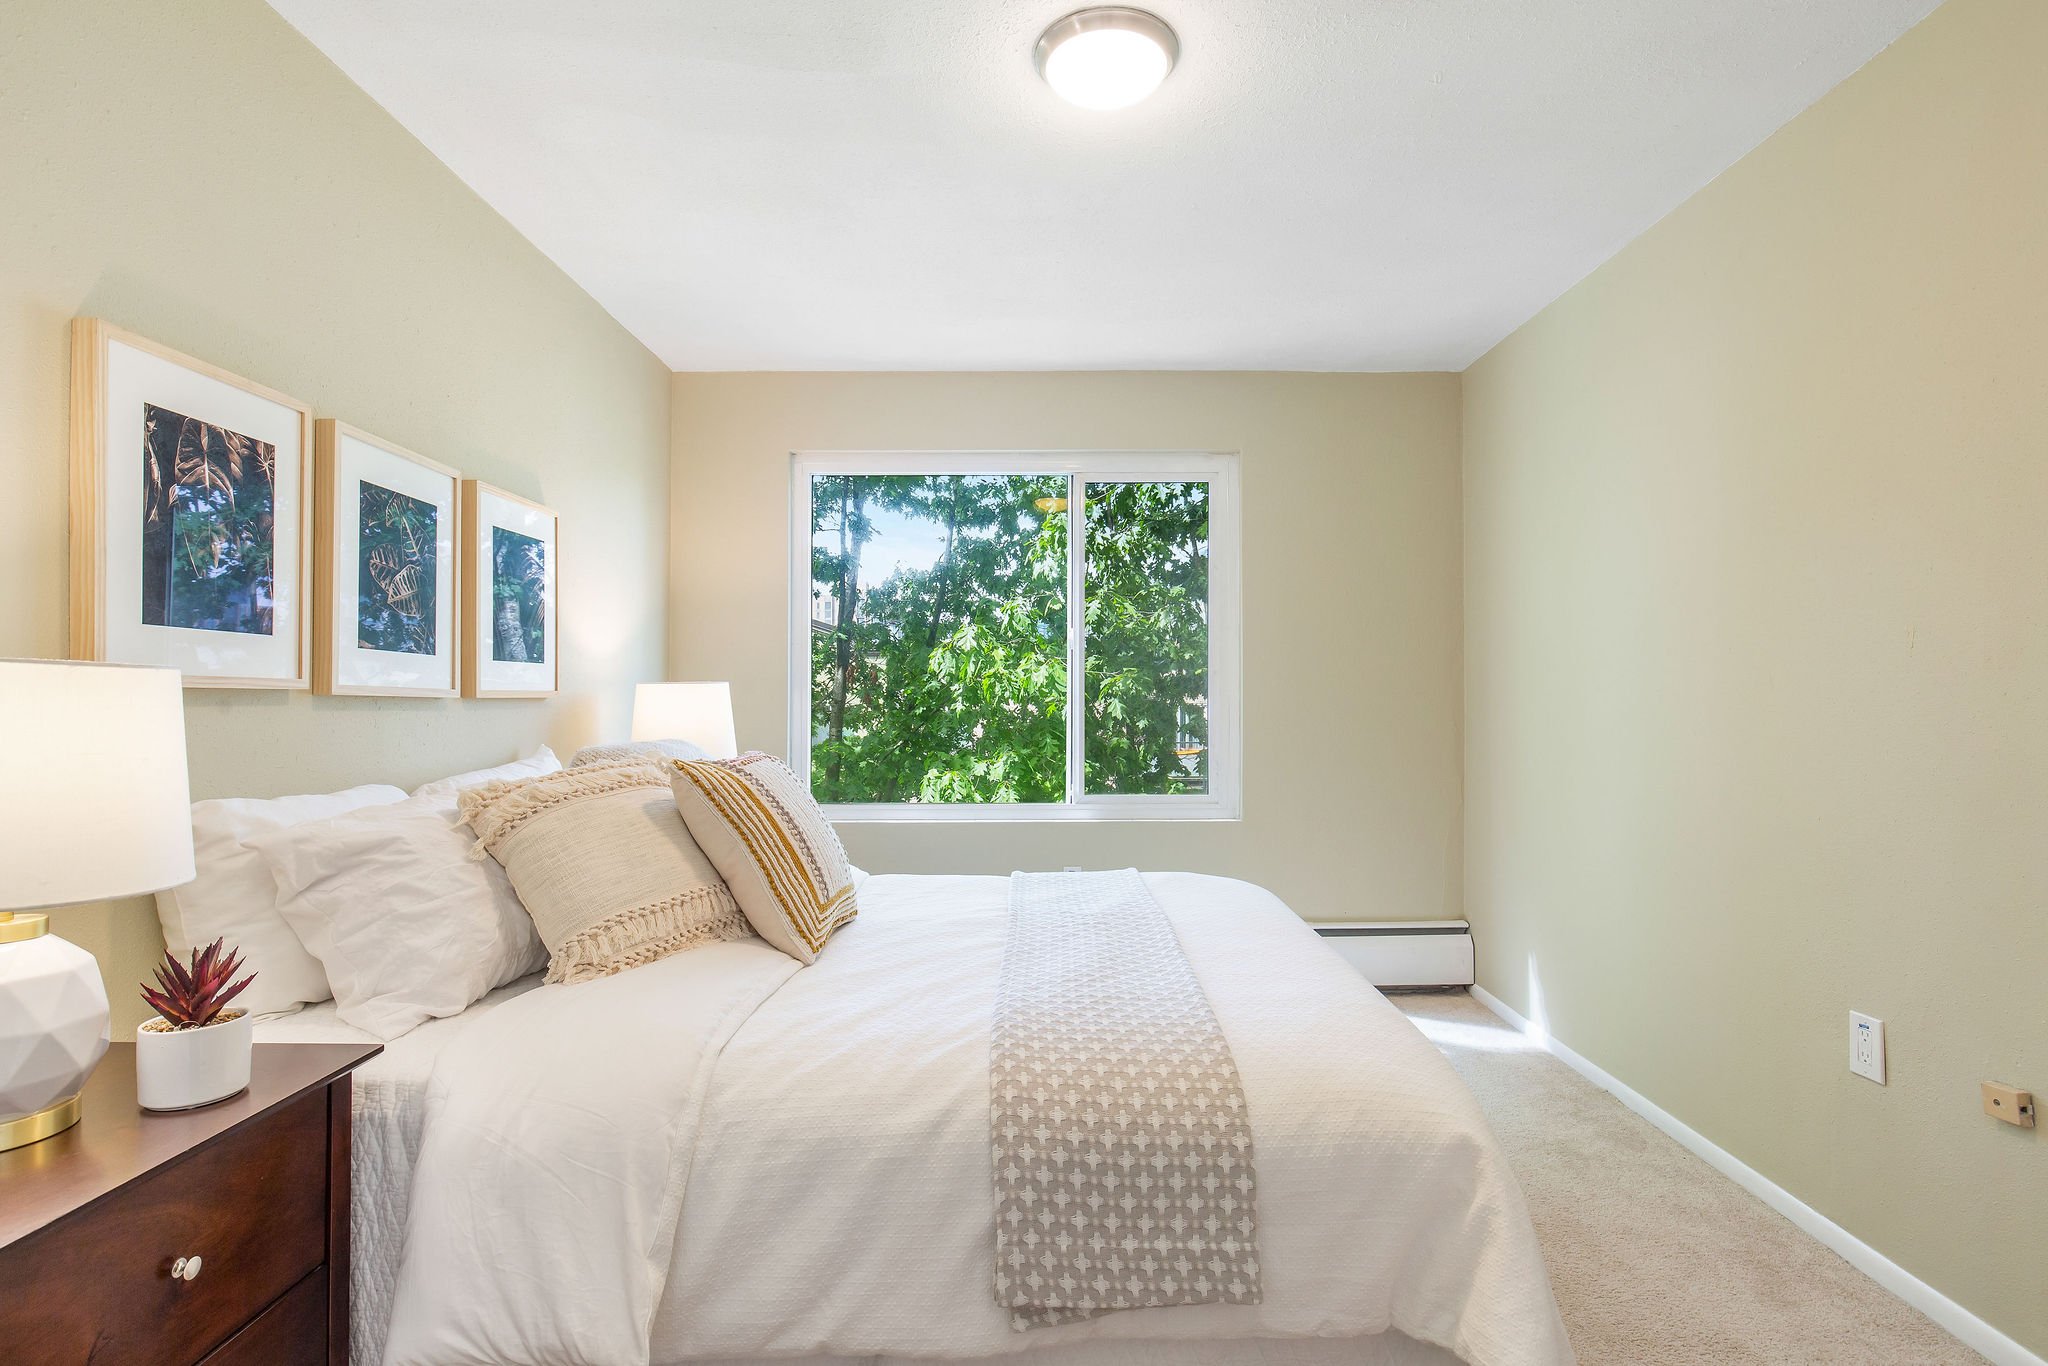  image description: interior of bedroom with queen bed, window, and tan carpet 